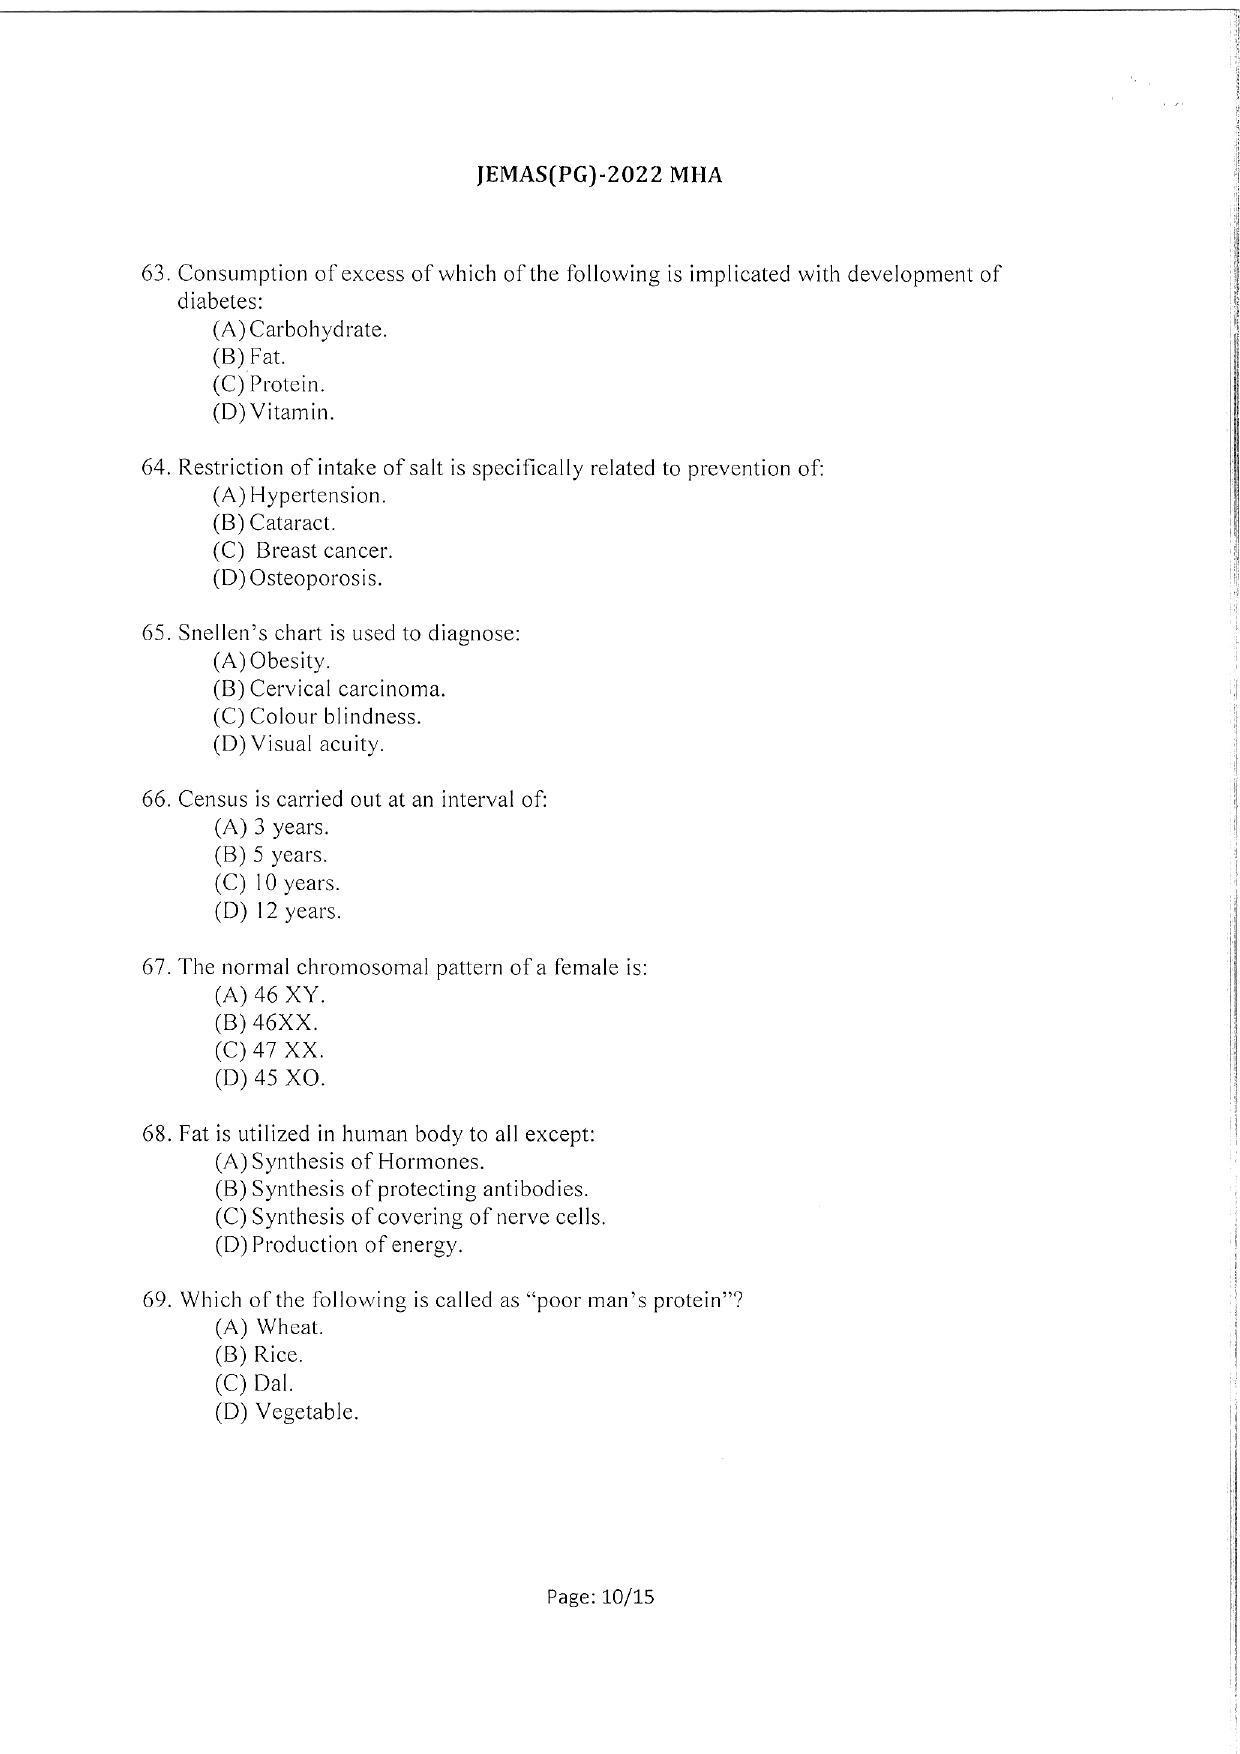 WBJEEB JEMAS (PG) 2022 MHA Question Paper - Page 12